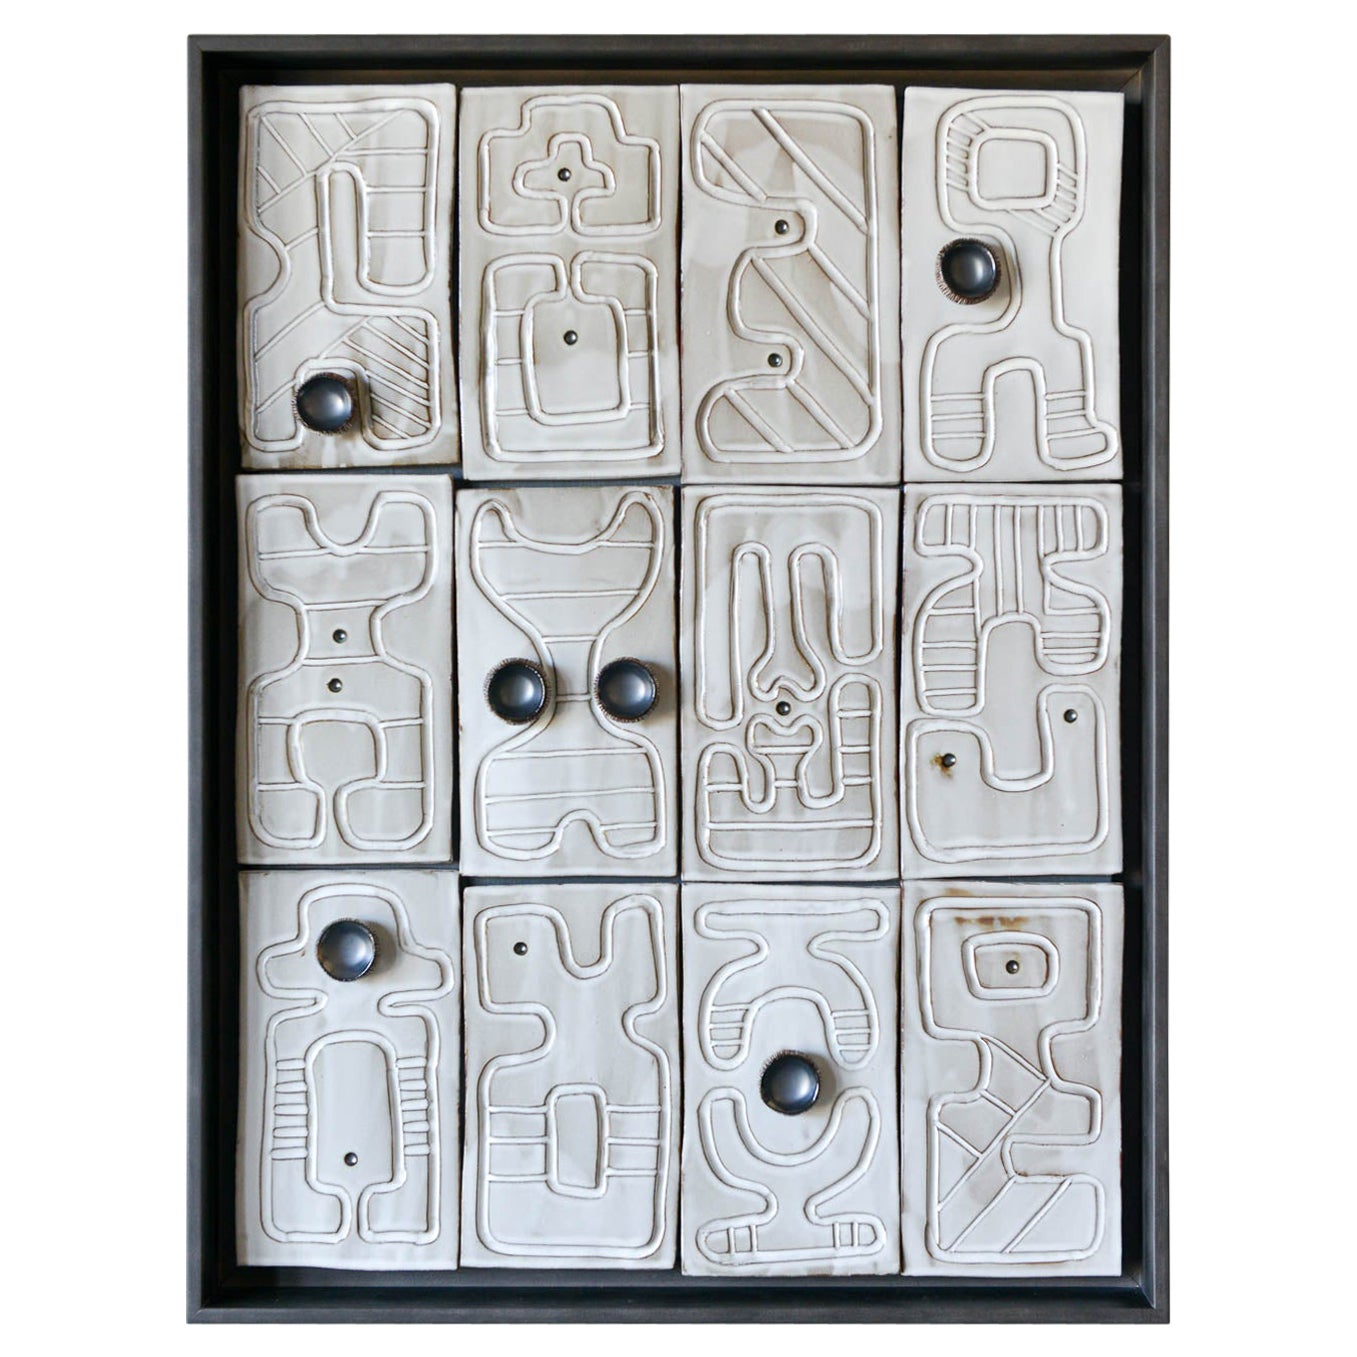 Ceramic Wall Relief by California Artist Adele Martin, 'New Alphabet-Dialog'